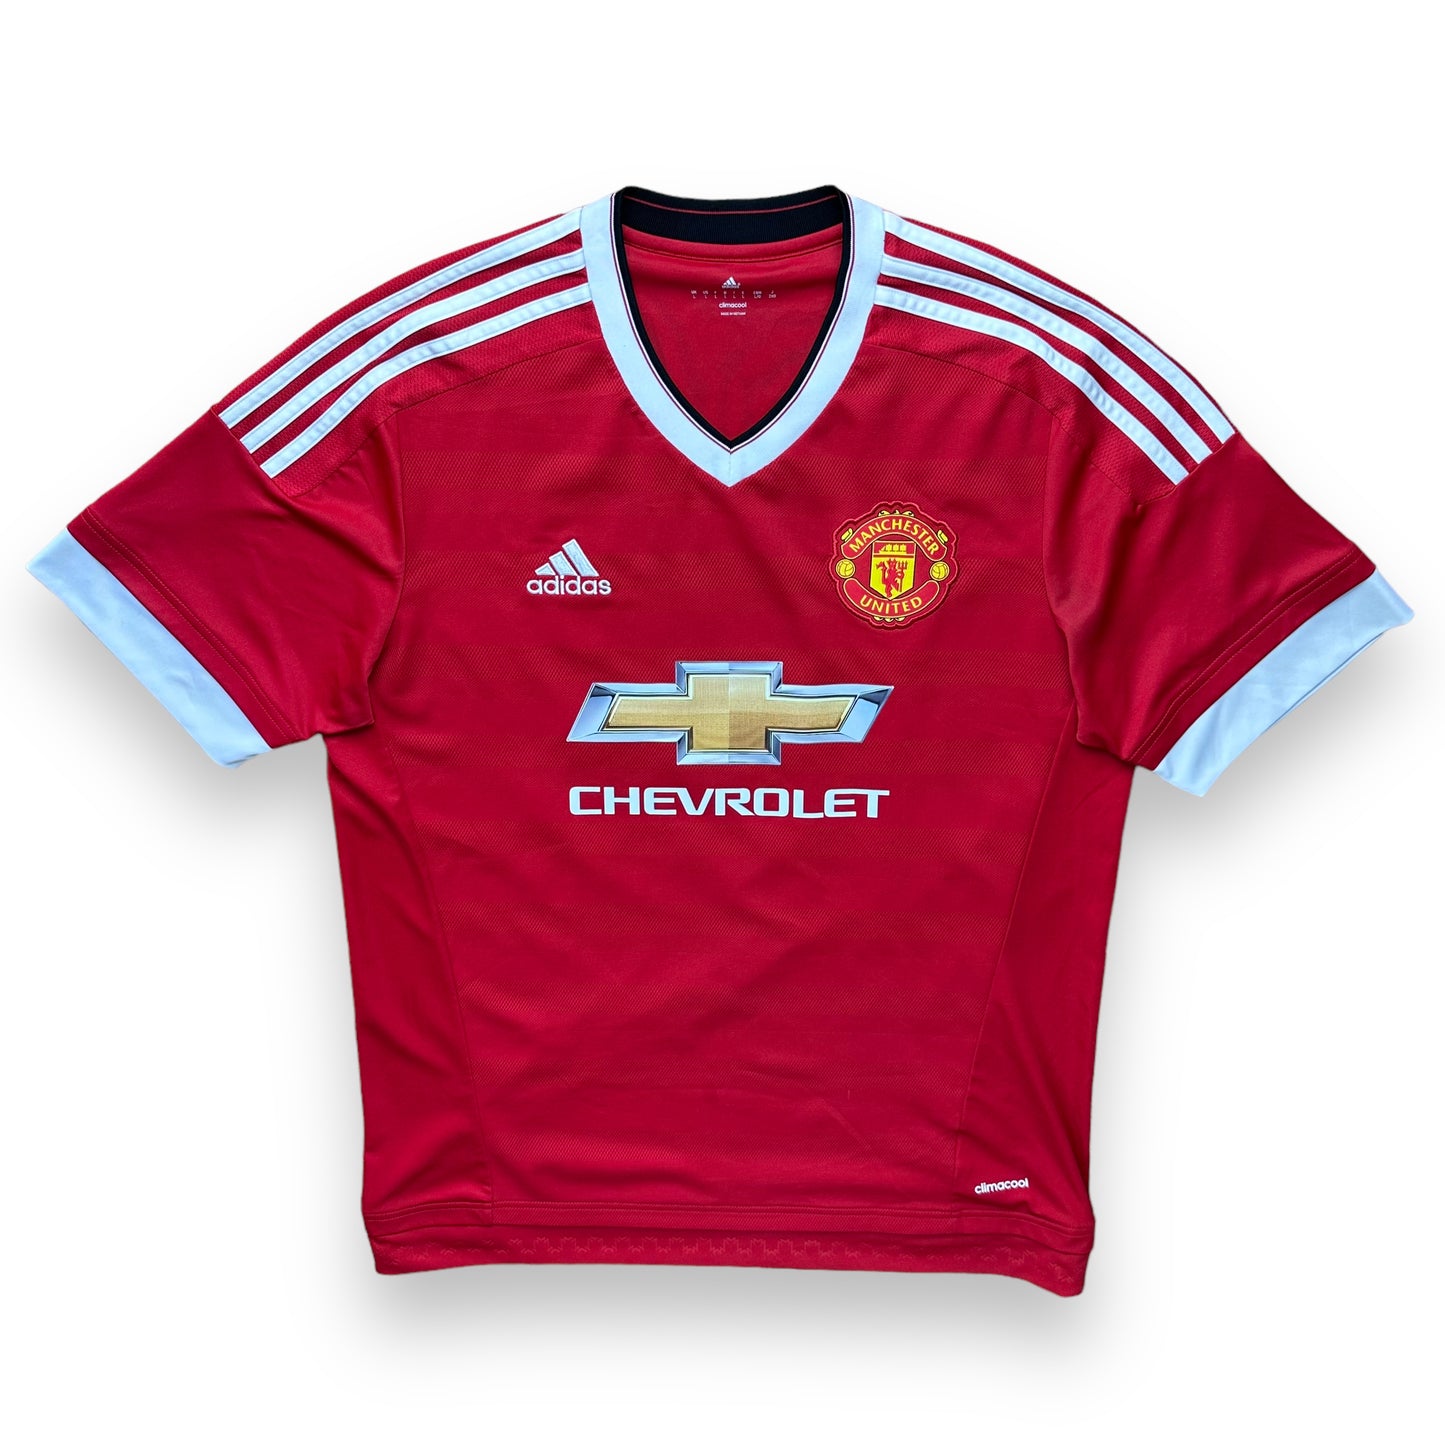 Manchester United 2015-16 Home Shirt (L) Carrick #16